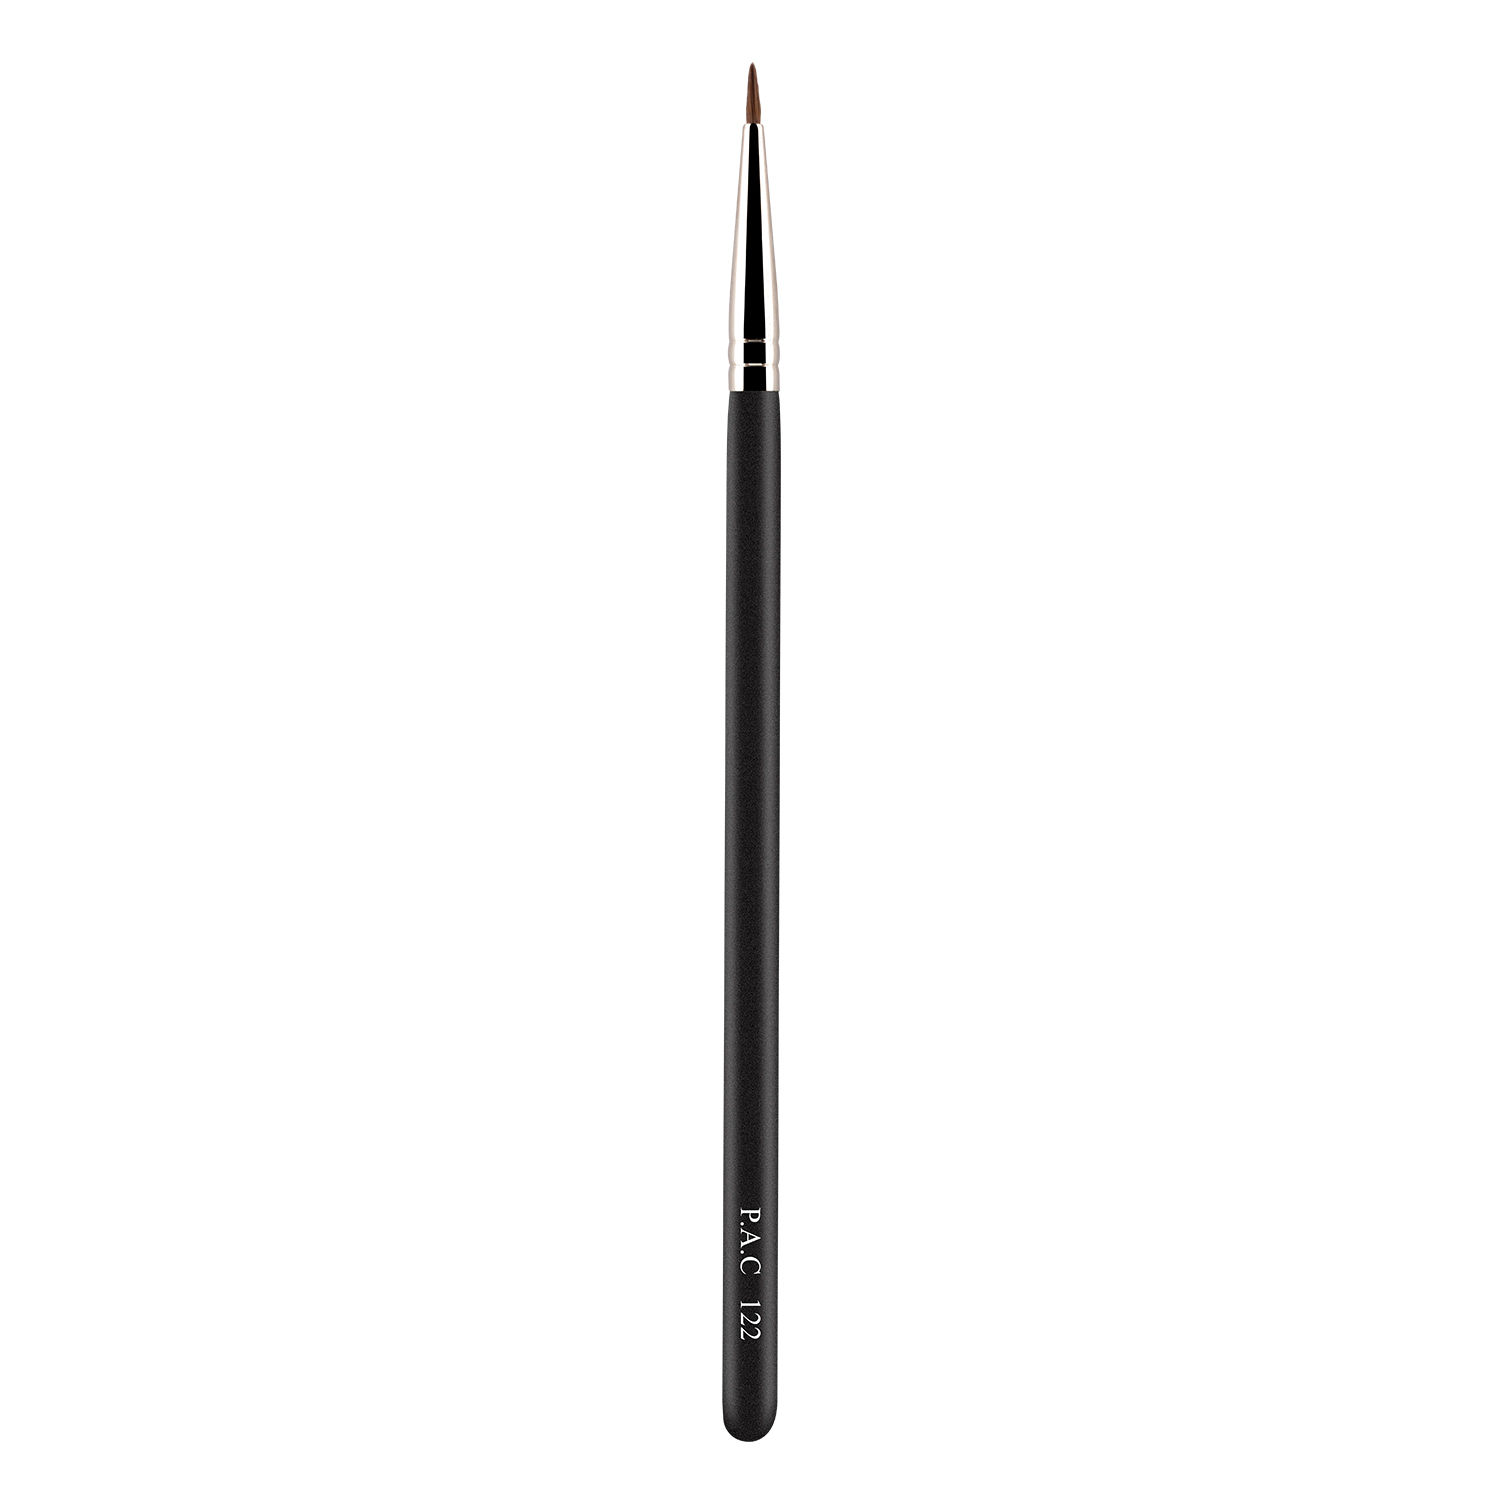 PAC Eyeliner Brush - 122